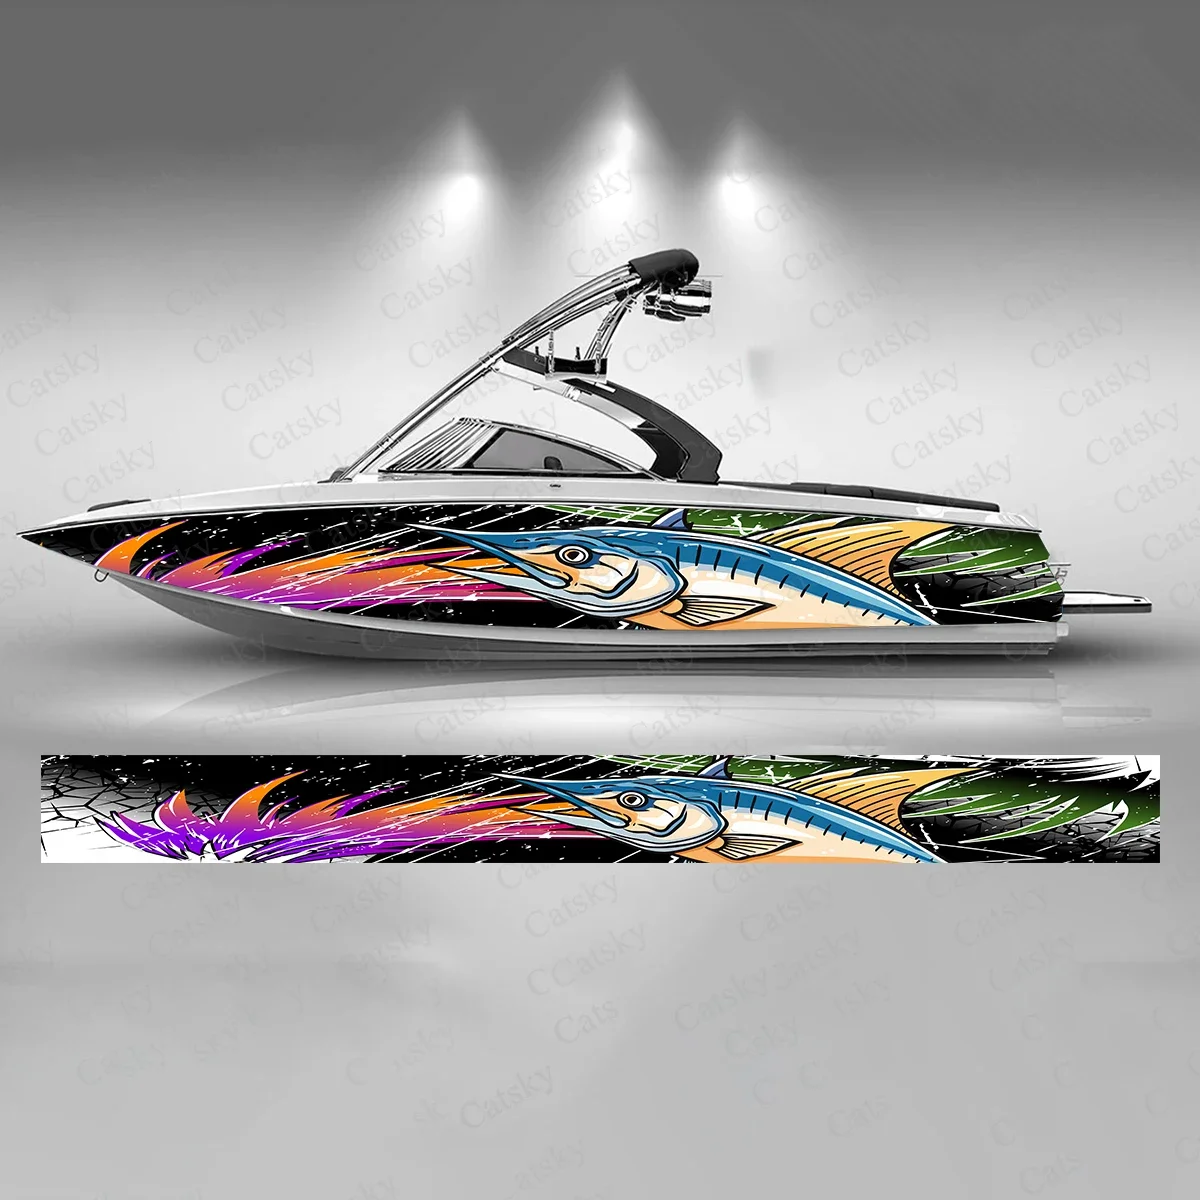 

Marlin Fish Colorful Geometry Boat Sticker Fashion Custom Fish Boat-Sticker Vinyl Waterproof Boat Wrap Graphic Boat Wrap Decal